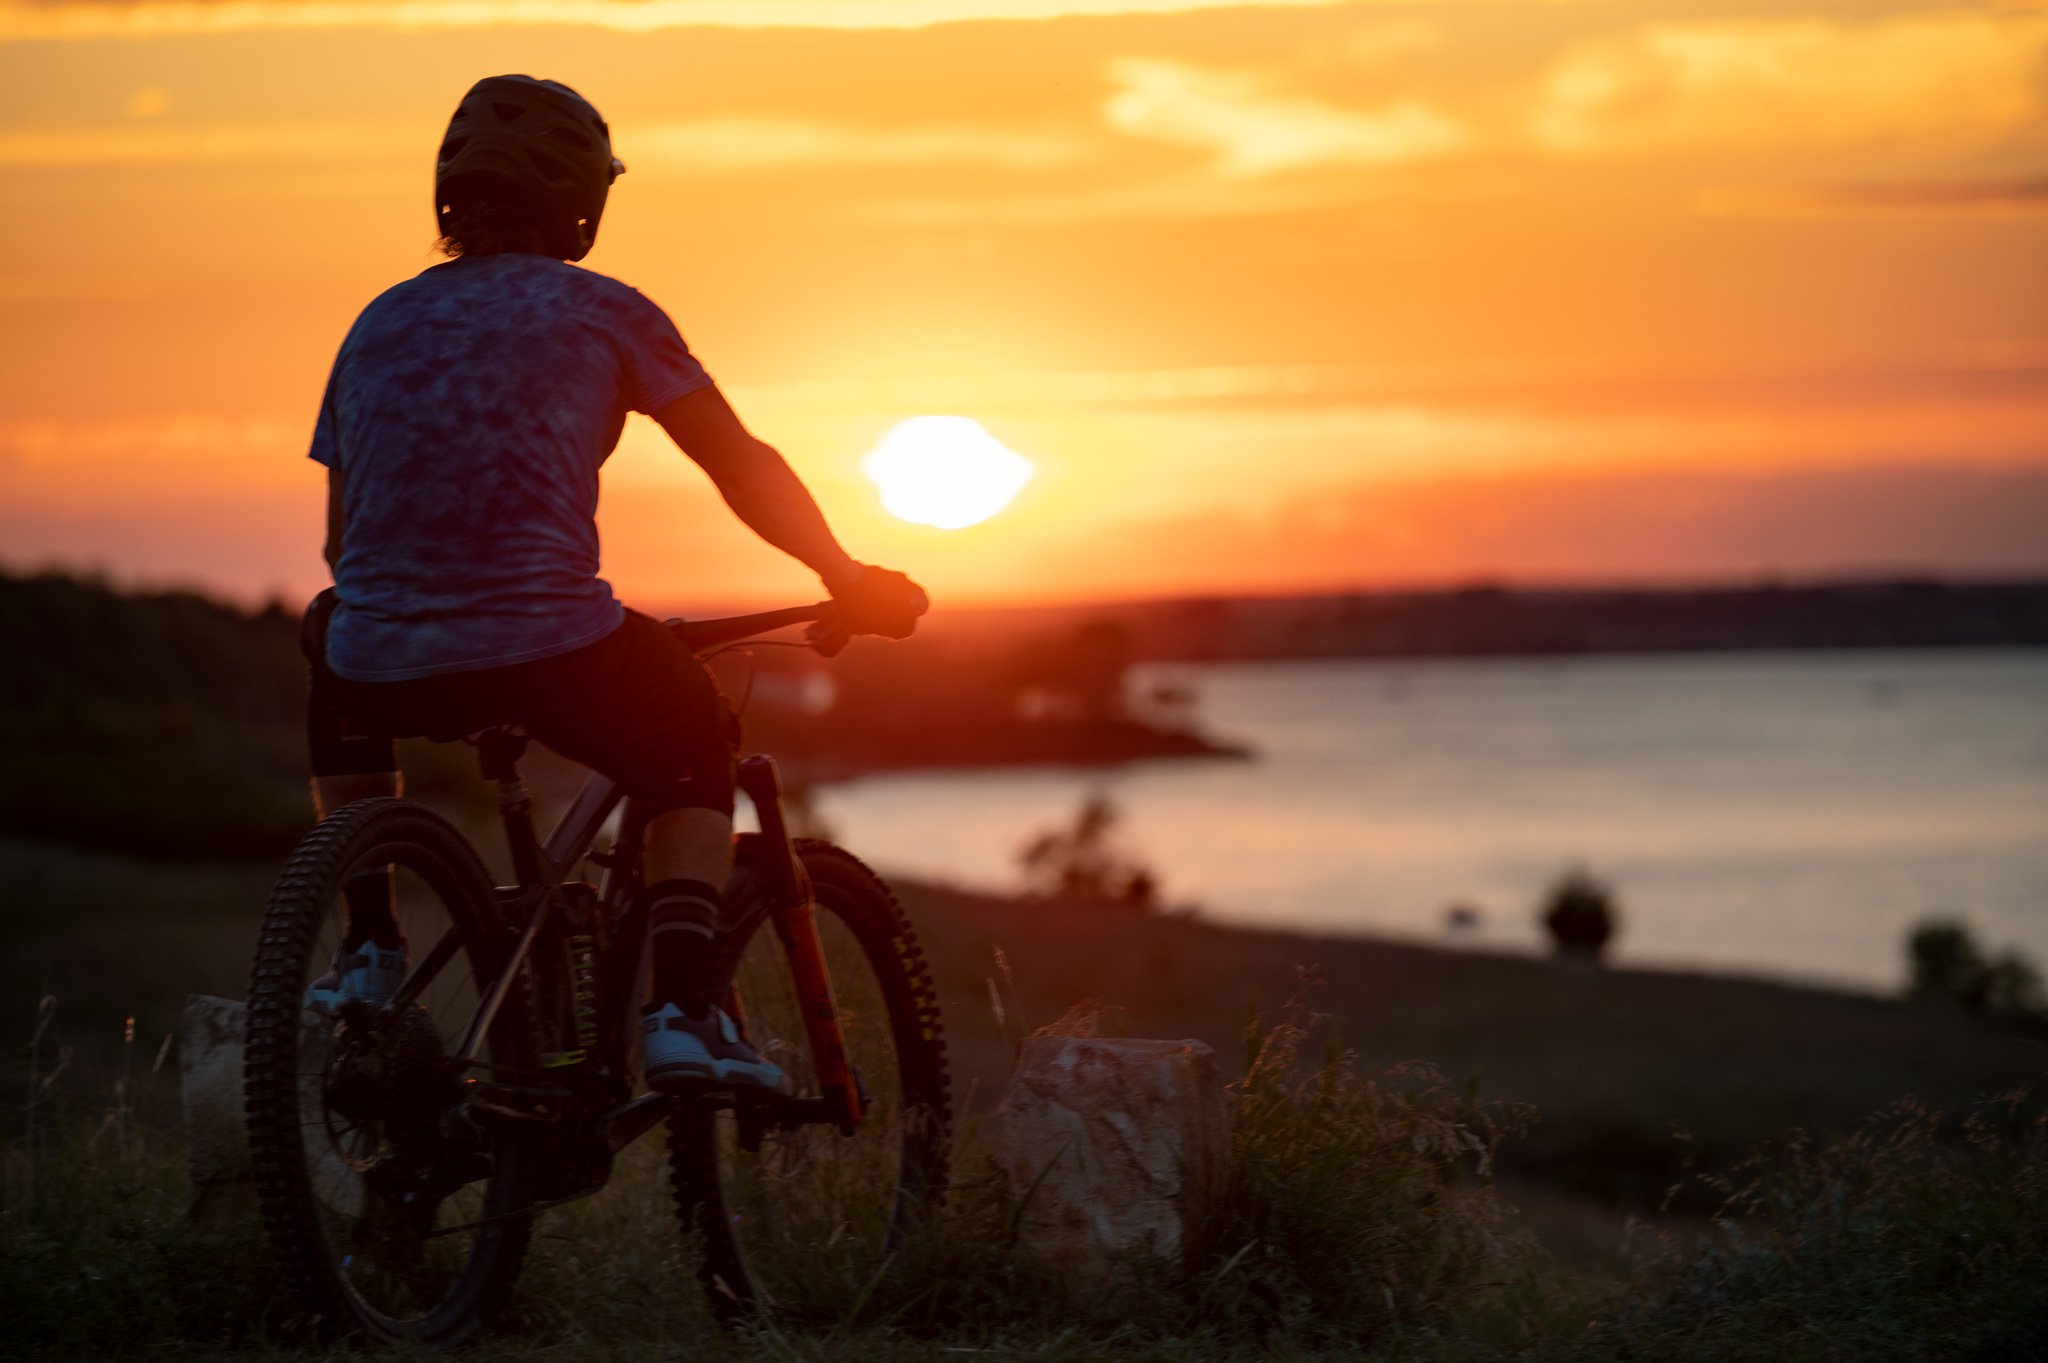 electric-mountain-bike-rider-scenic-sunset.jpg